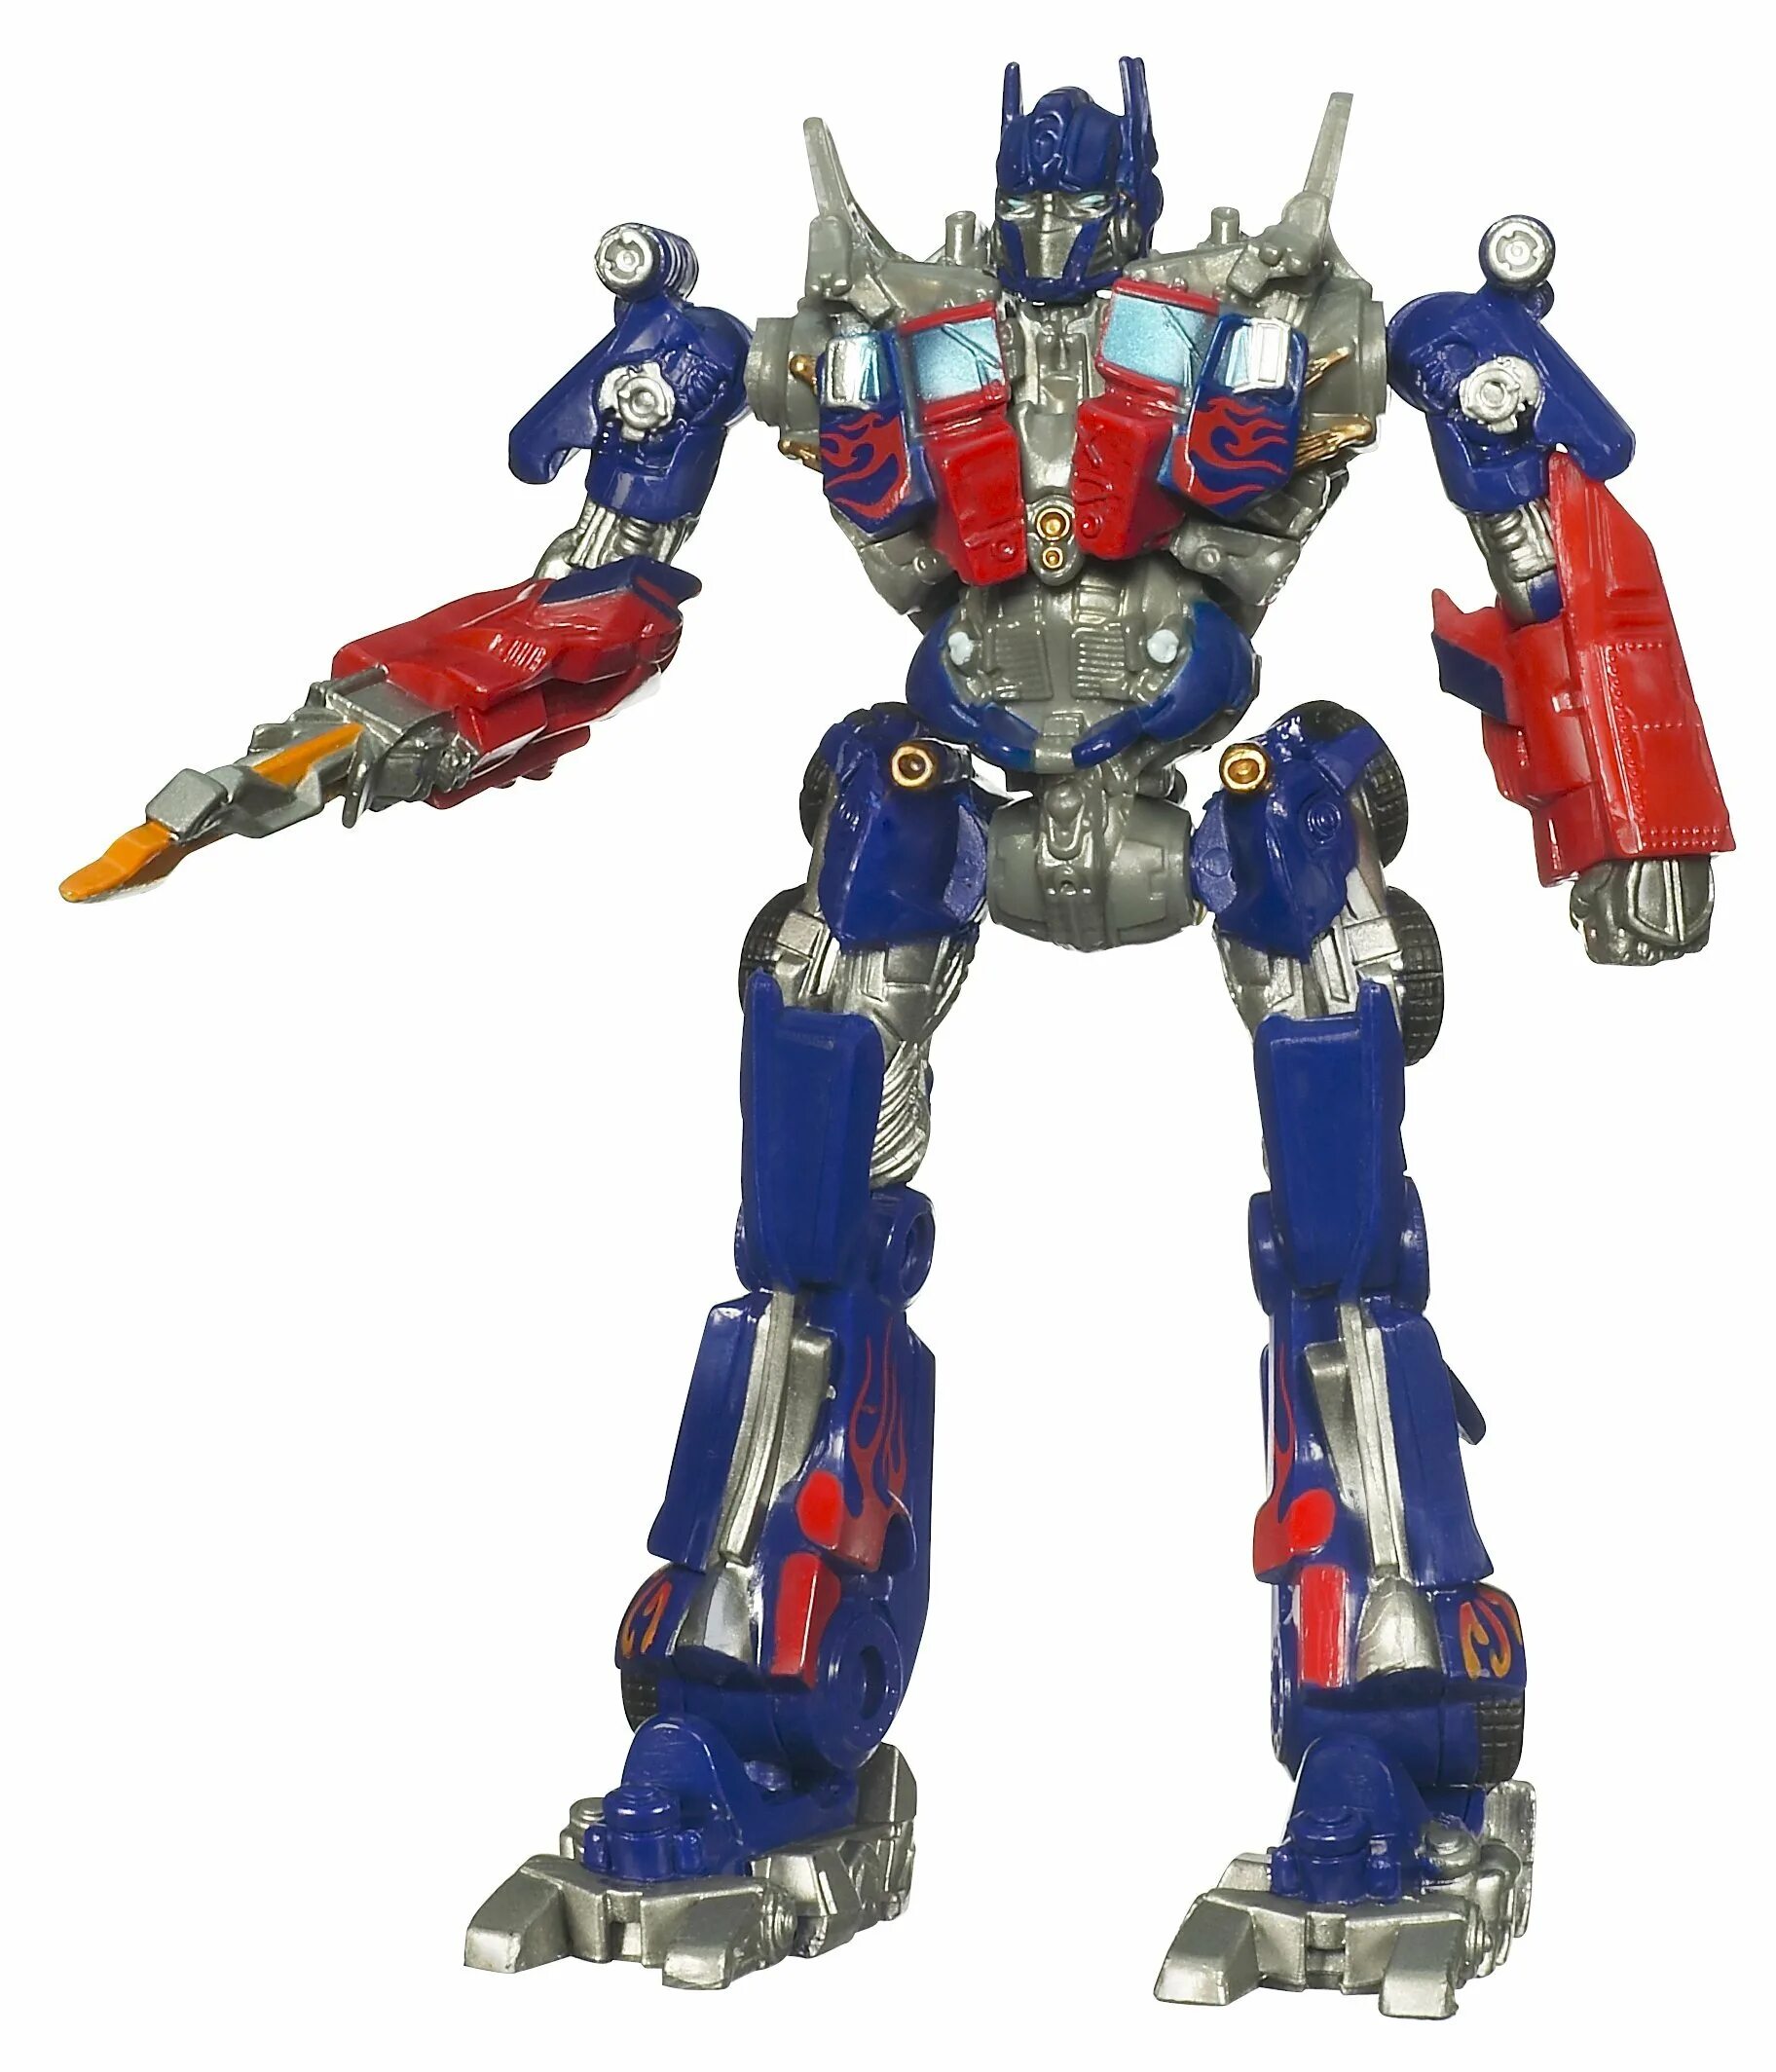 Transformers ROTF Optimus Prime Toy. Оптимус Прайм Прайм фигурка. Оптимус Прайм игрушка трансформер 2009. Трансформеры Родимус Прайм фигурка. Prime toys